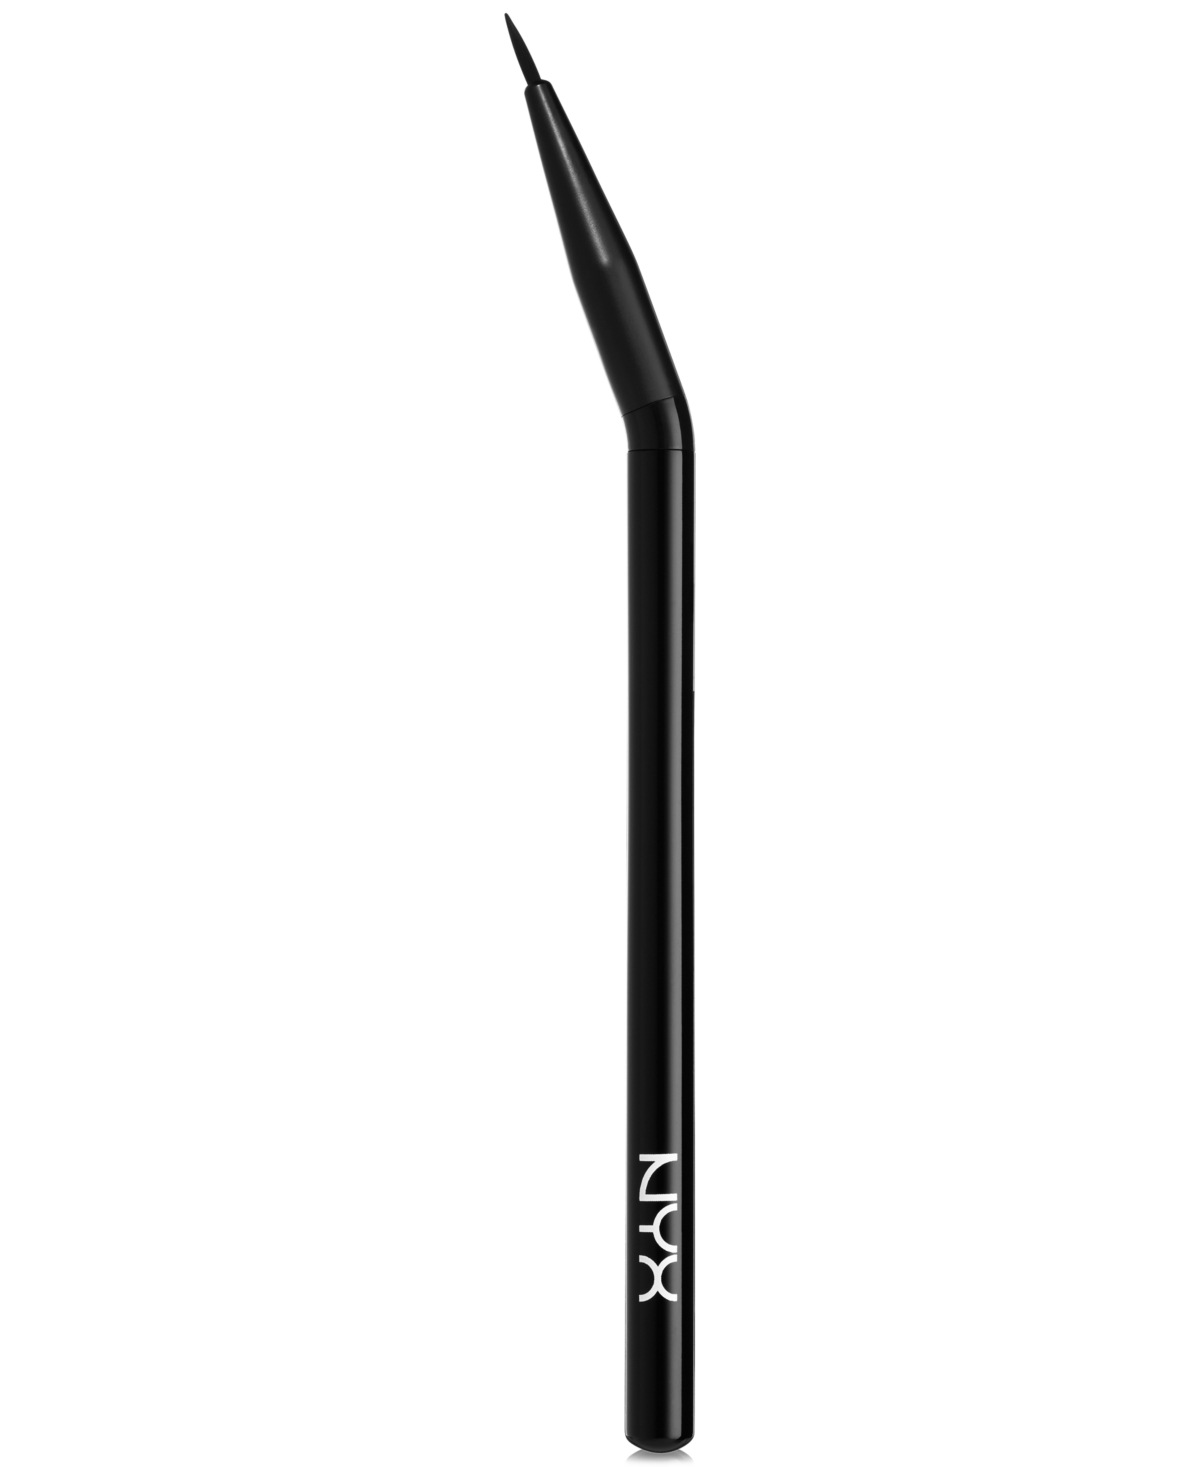 Pro Angled Eyeliner Brush, Created for Macy's - Open